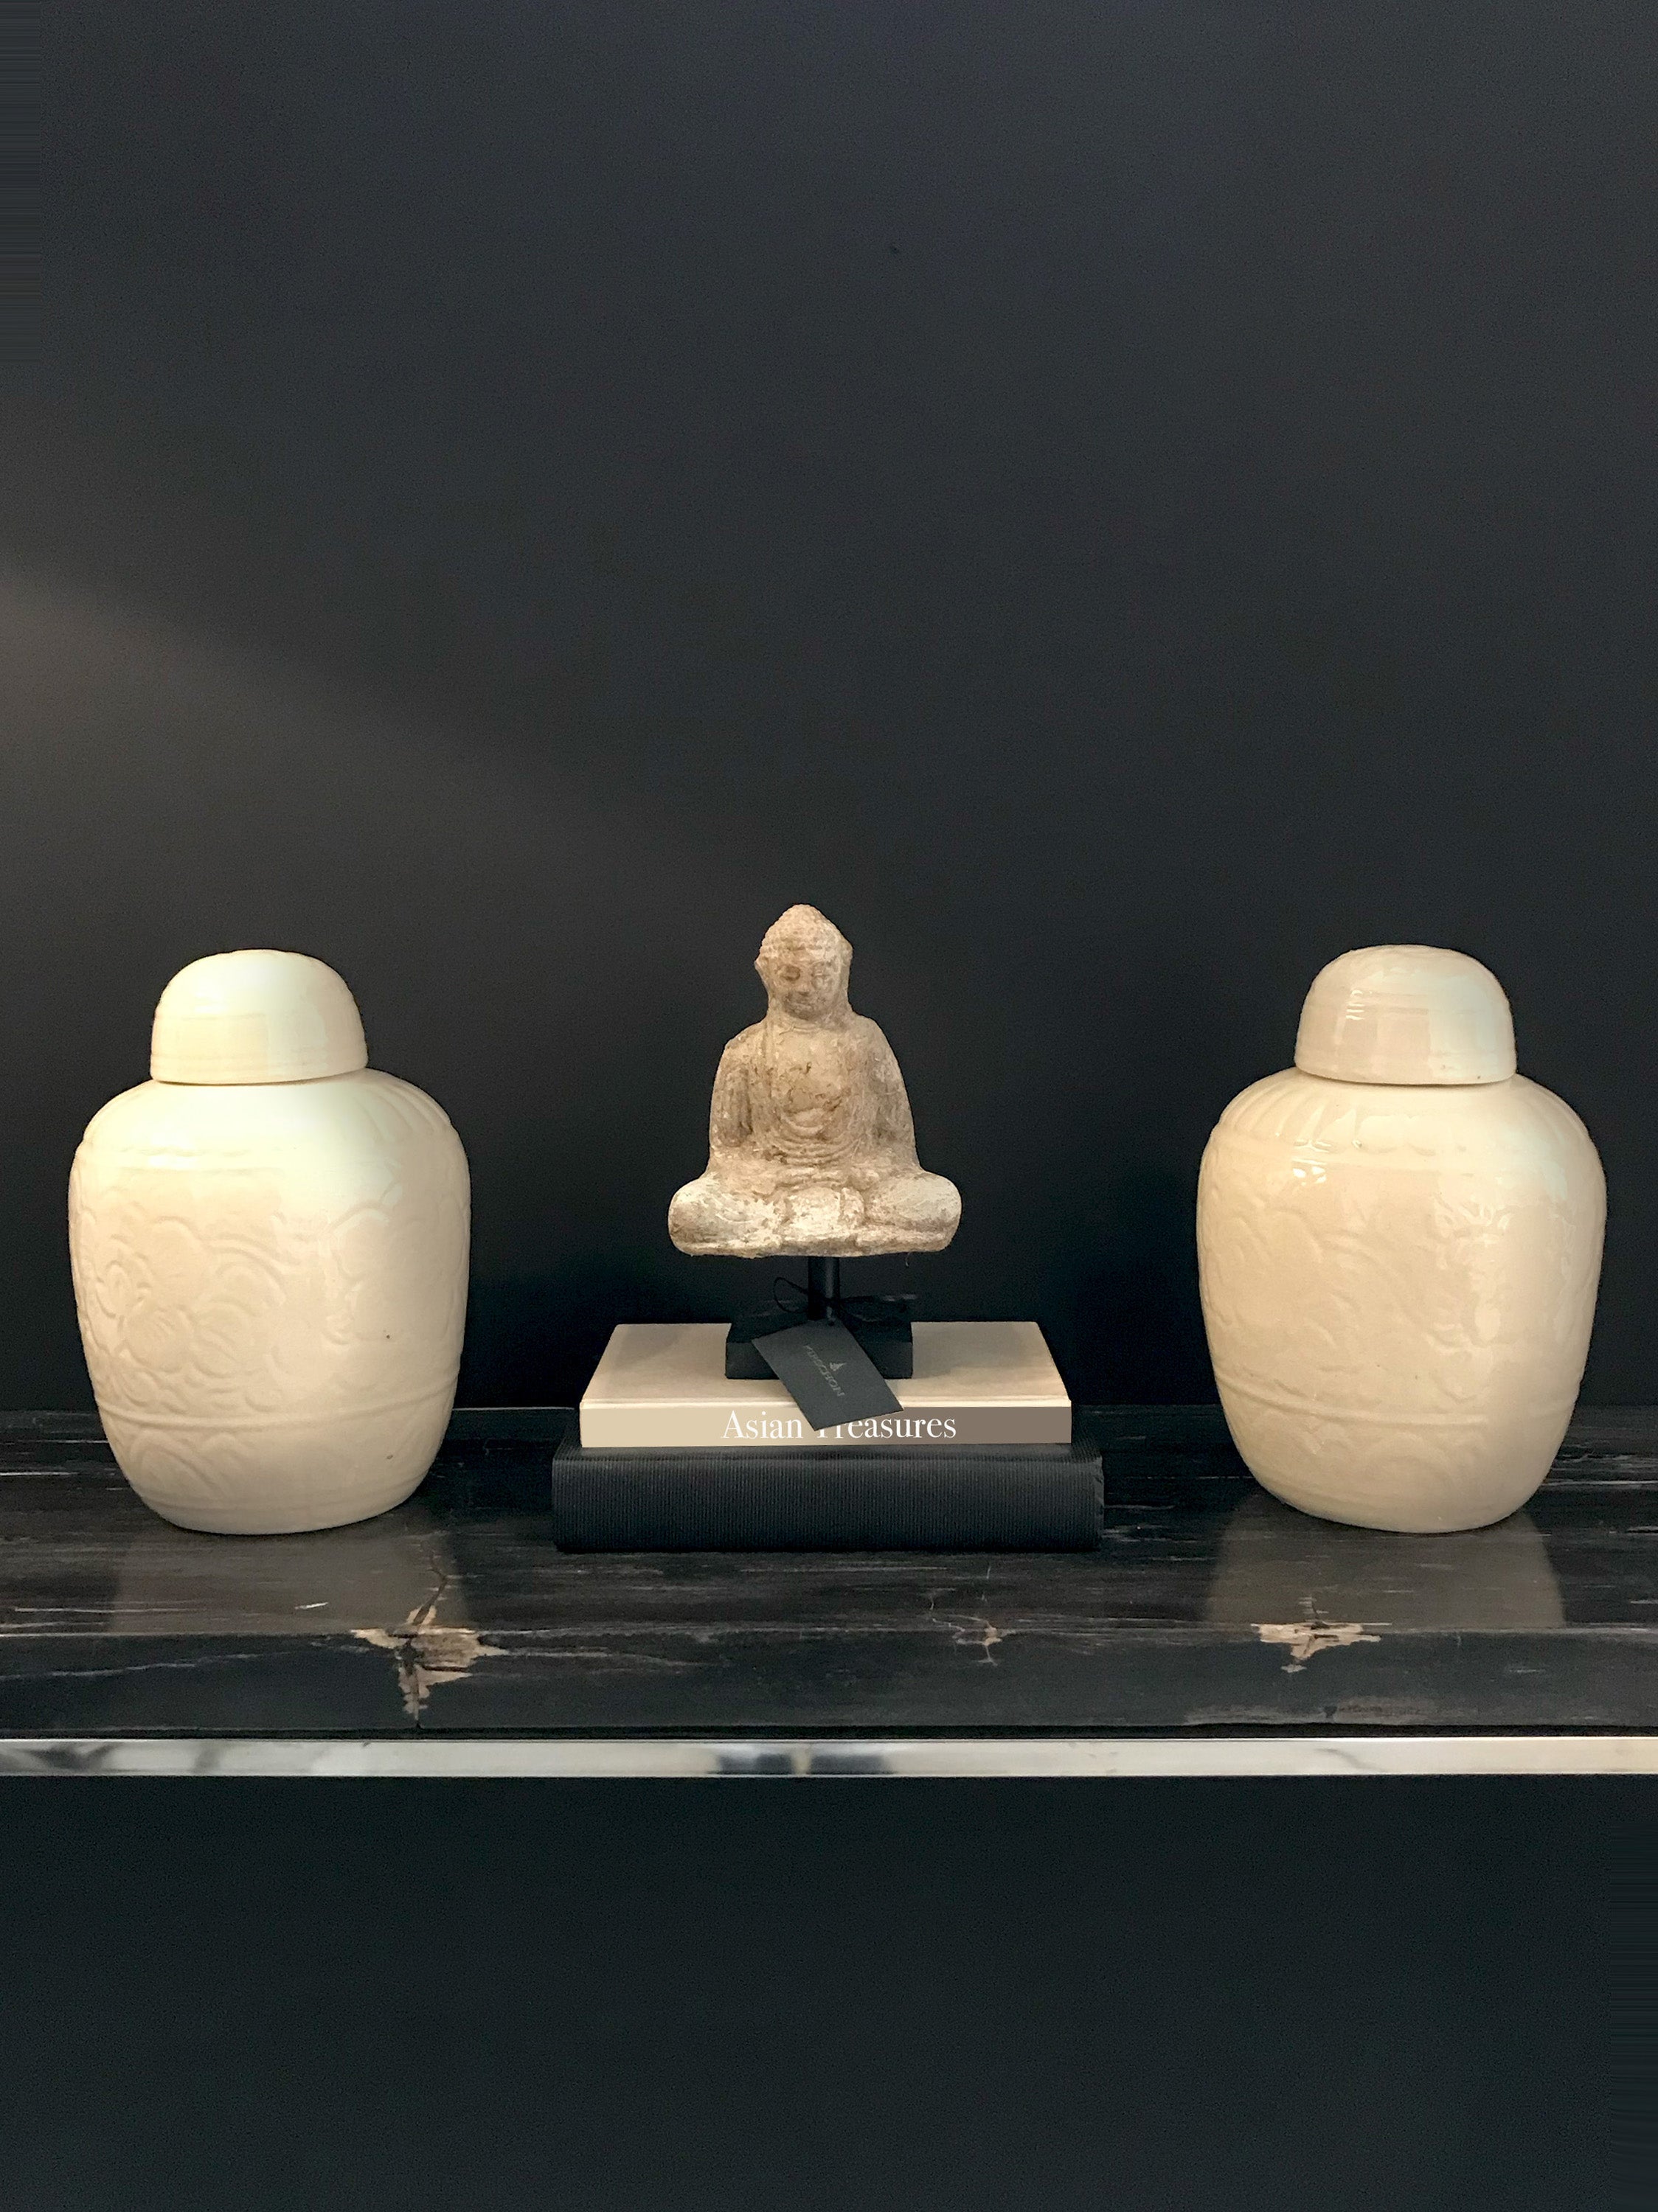 Sitting Buddha statue and 2 glazed urns - Asian Art from Kirschon